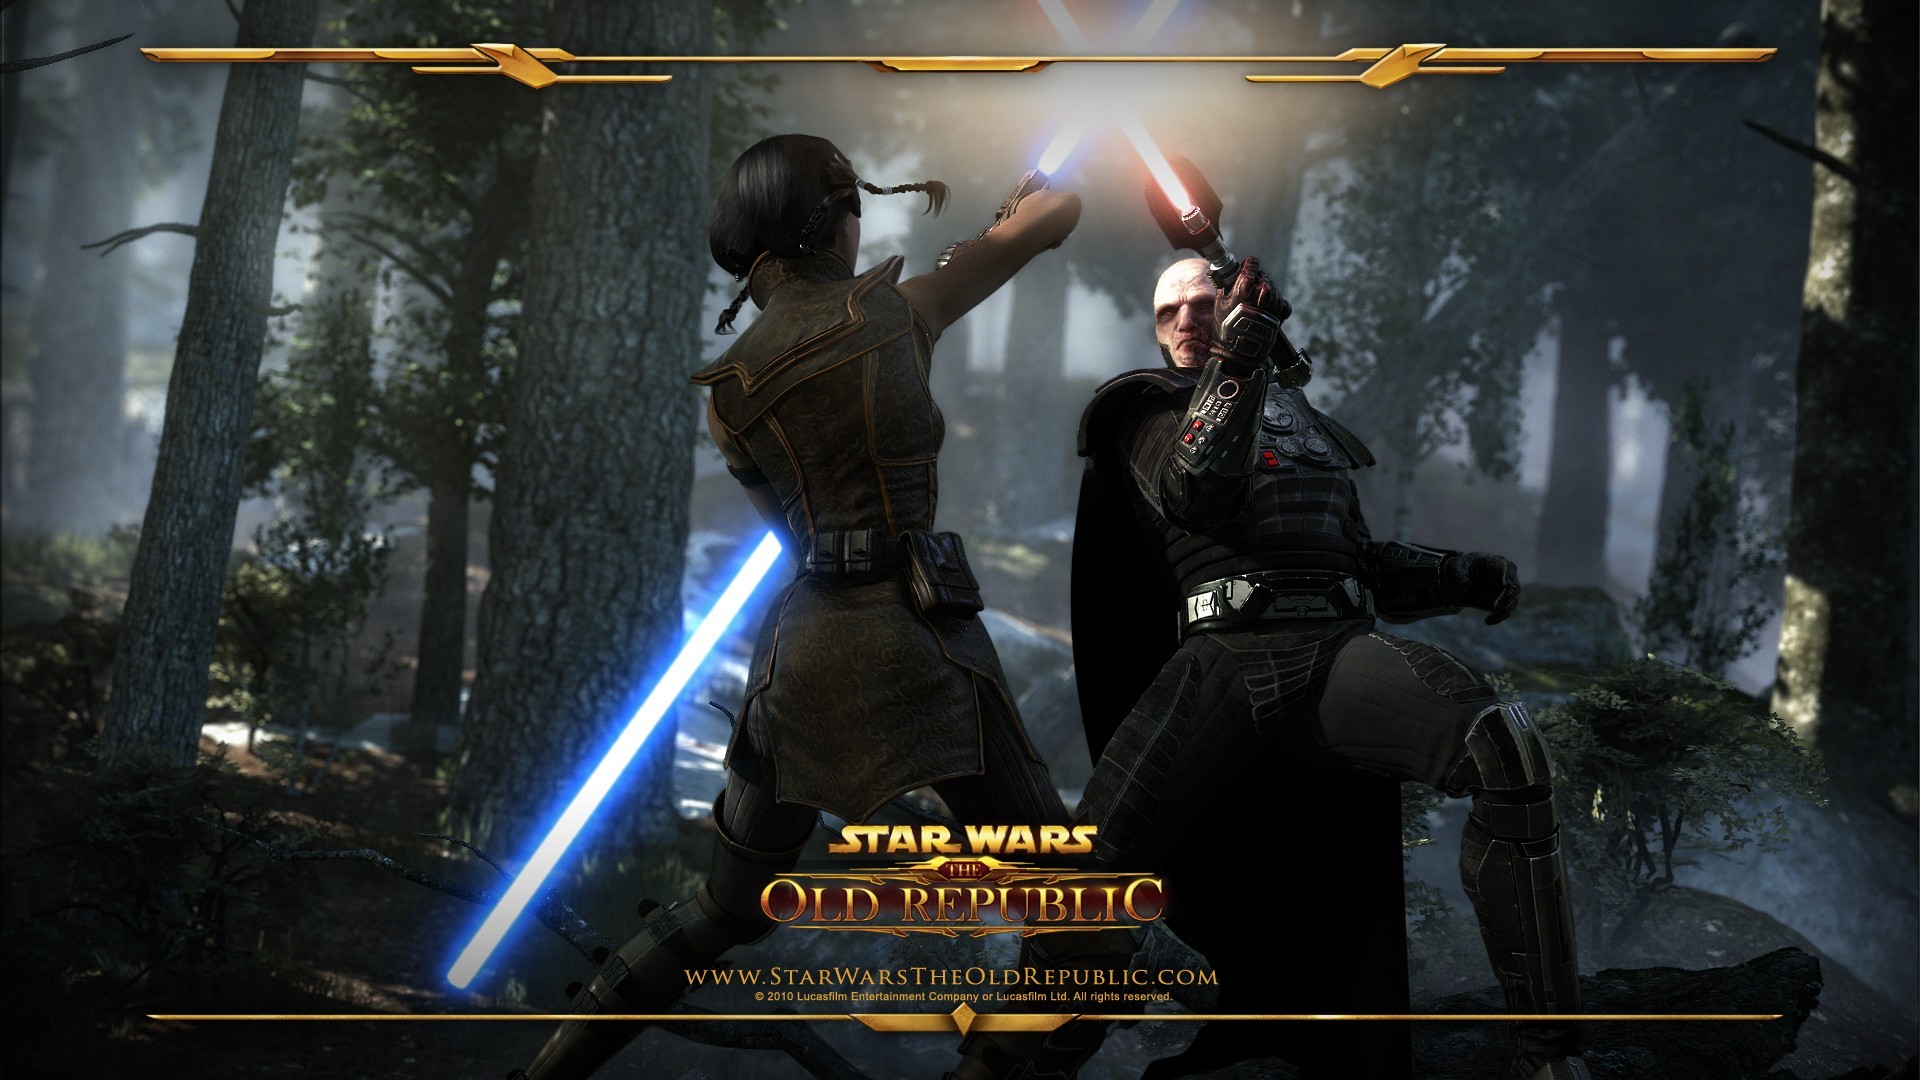 General 1920x1080 Star Wars Star Wars: The Old Republic Darth Malgus Satele Shan Jedi Sith PC gaming 2010 (Year)